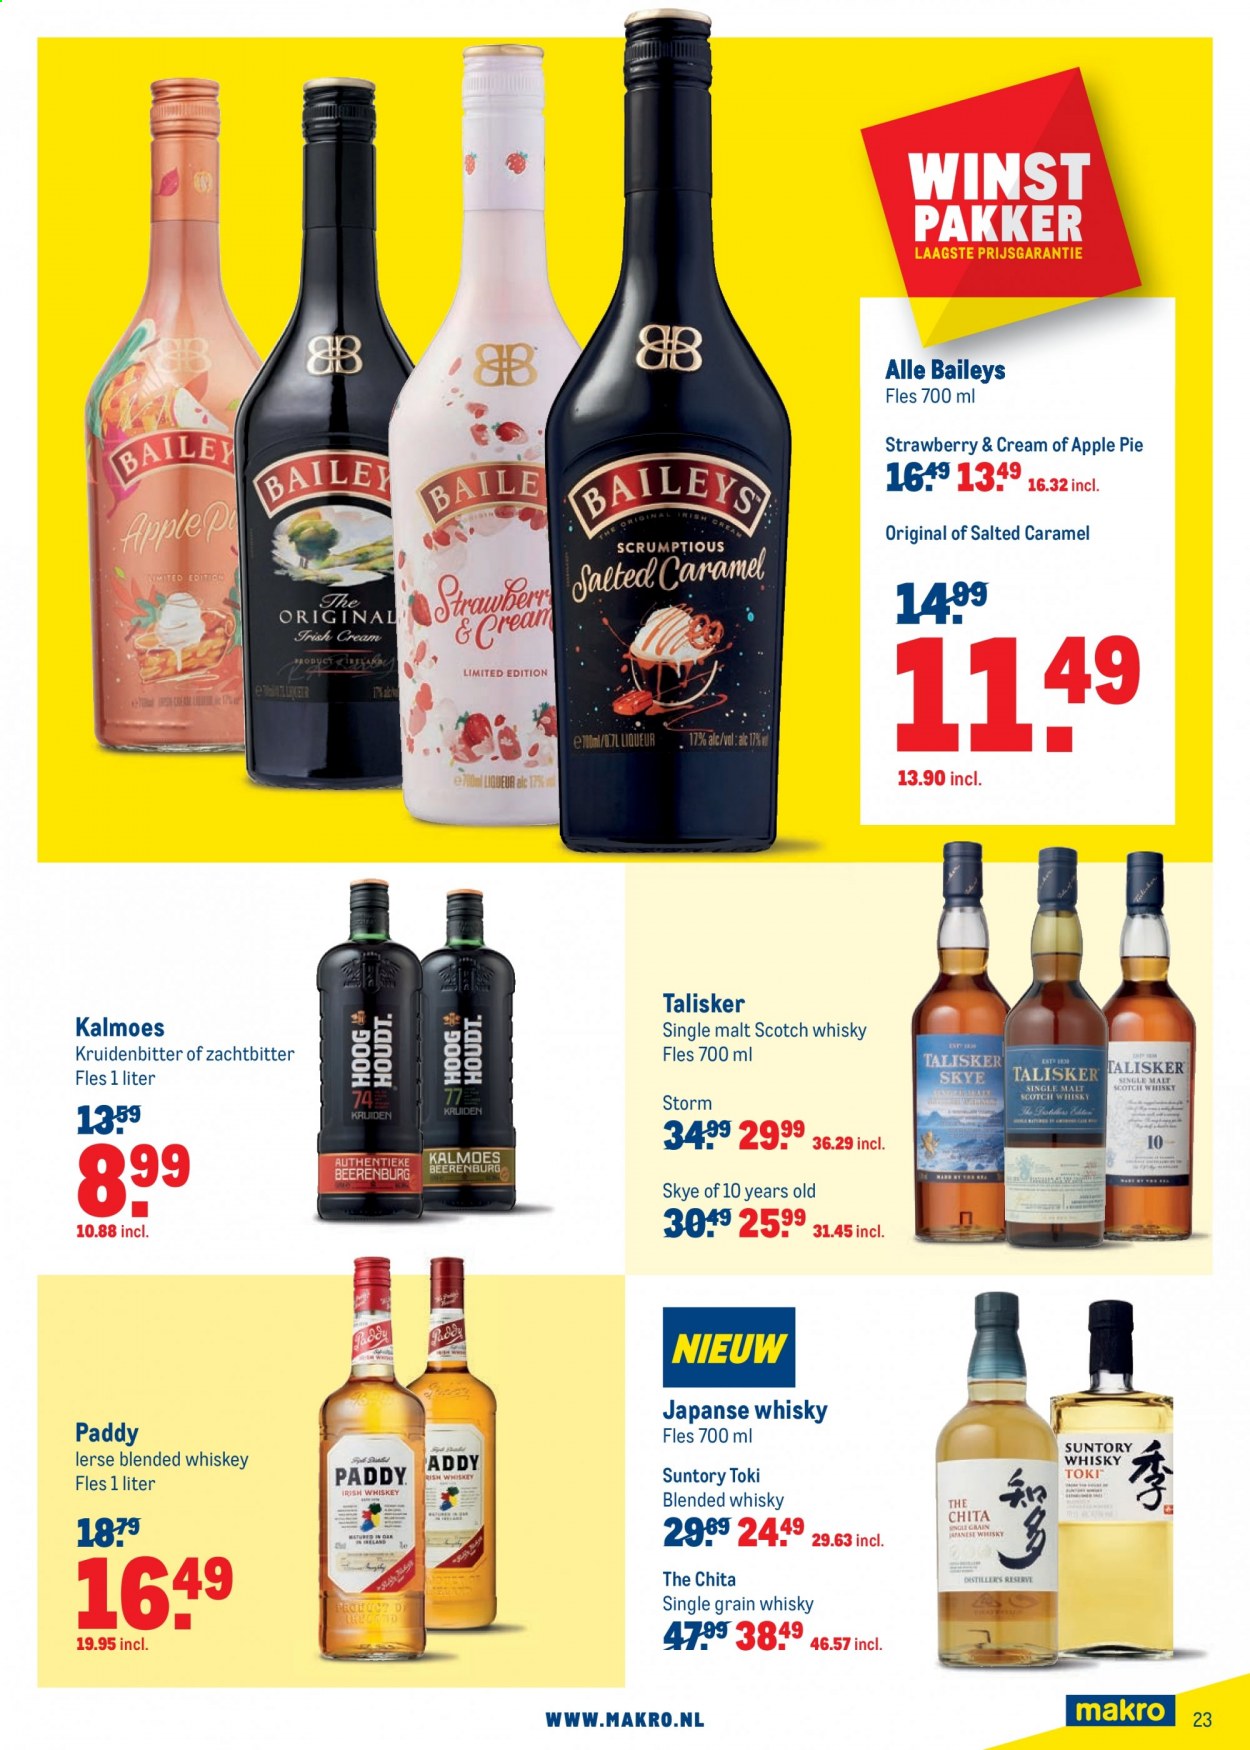 thumbnail - Makro-aanbieding - 25-5-2021 - 8-6-2021 -  producten in de aanbieding - Beerenburg, liqueur, scotch whisky, Single Malt, whiskey, whisky, Paddy, Talisker, Baileys. Pagina 23.